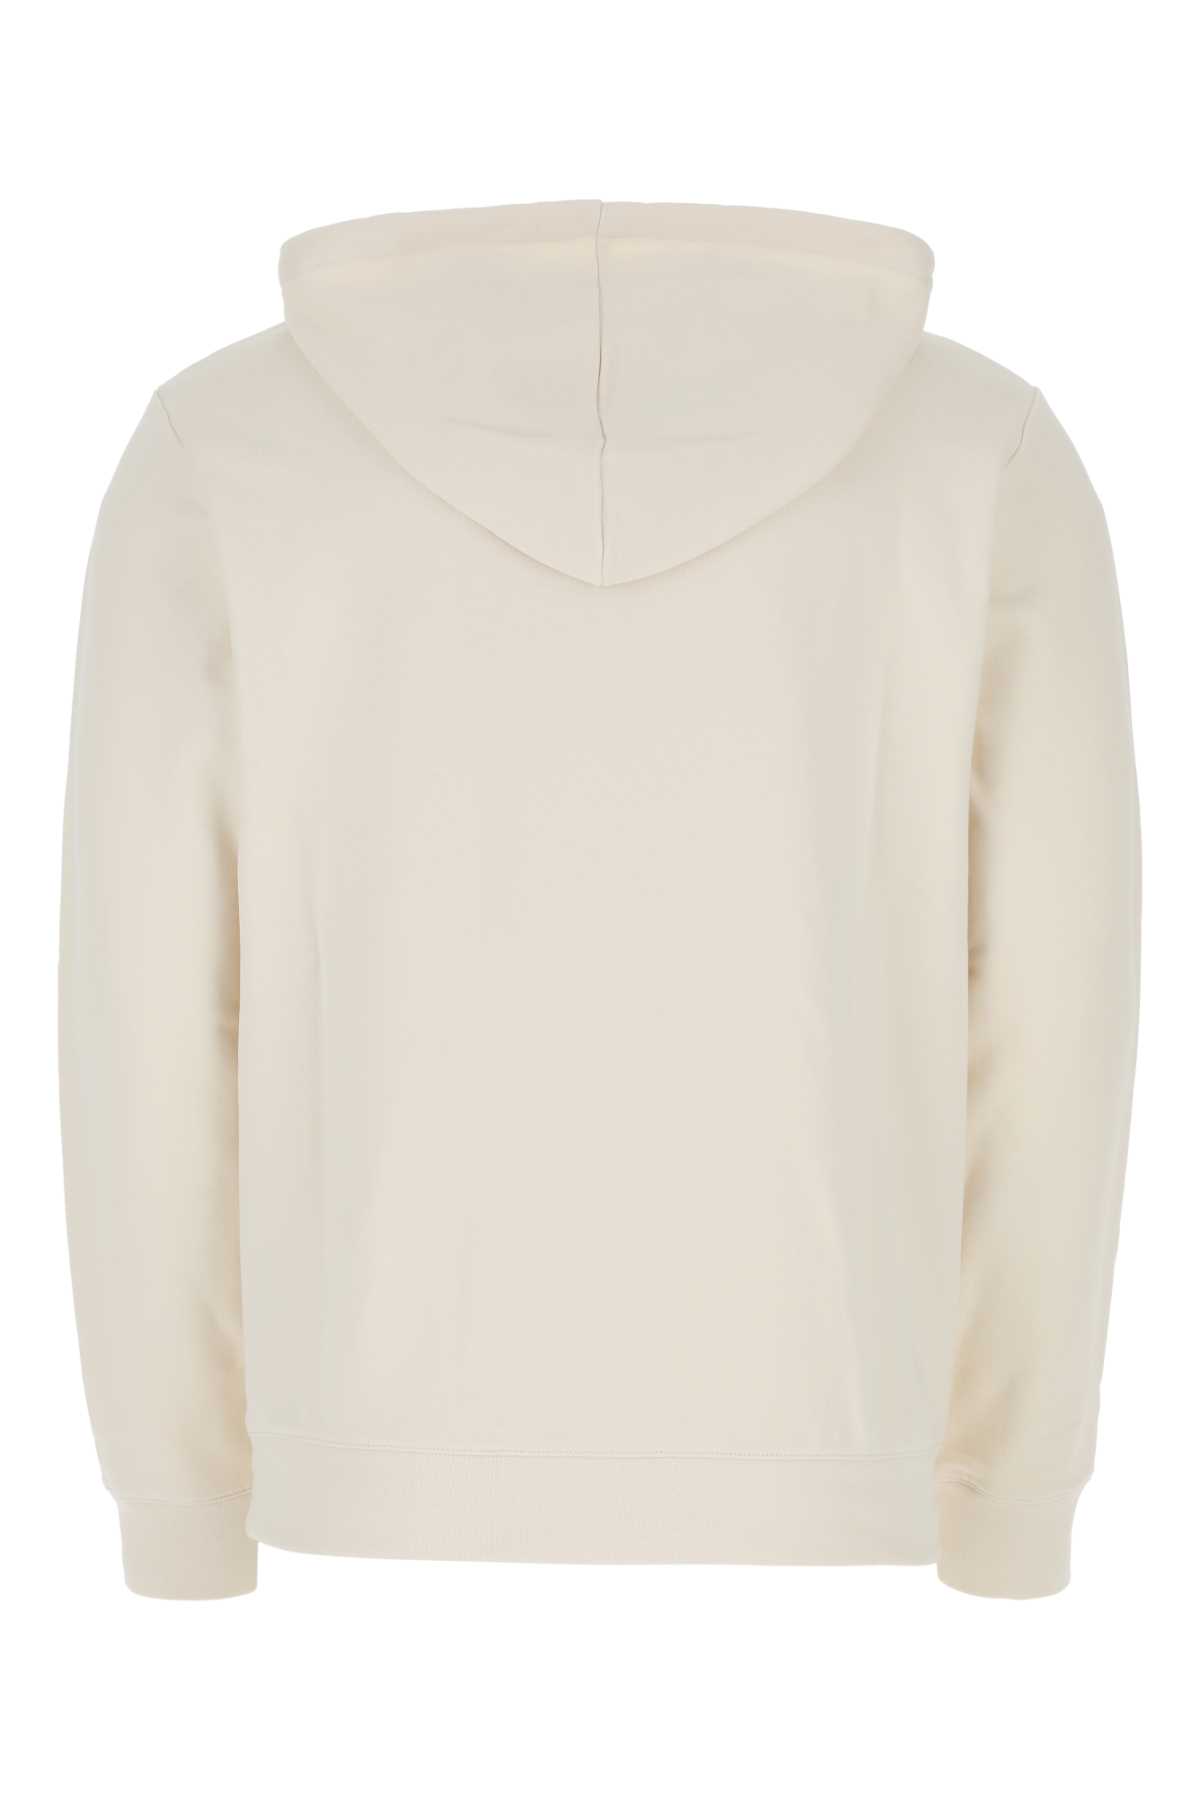 Apc Ivory Cotton Sweatshirt In White